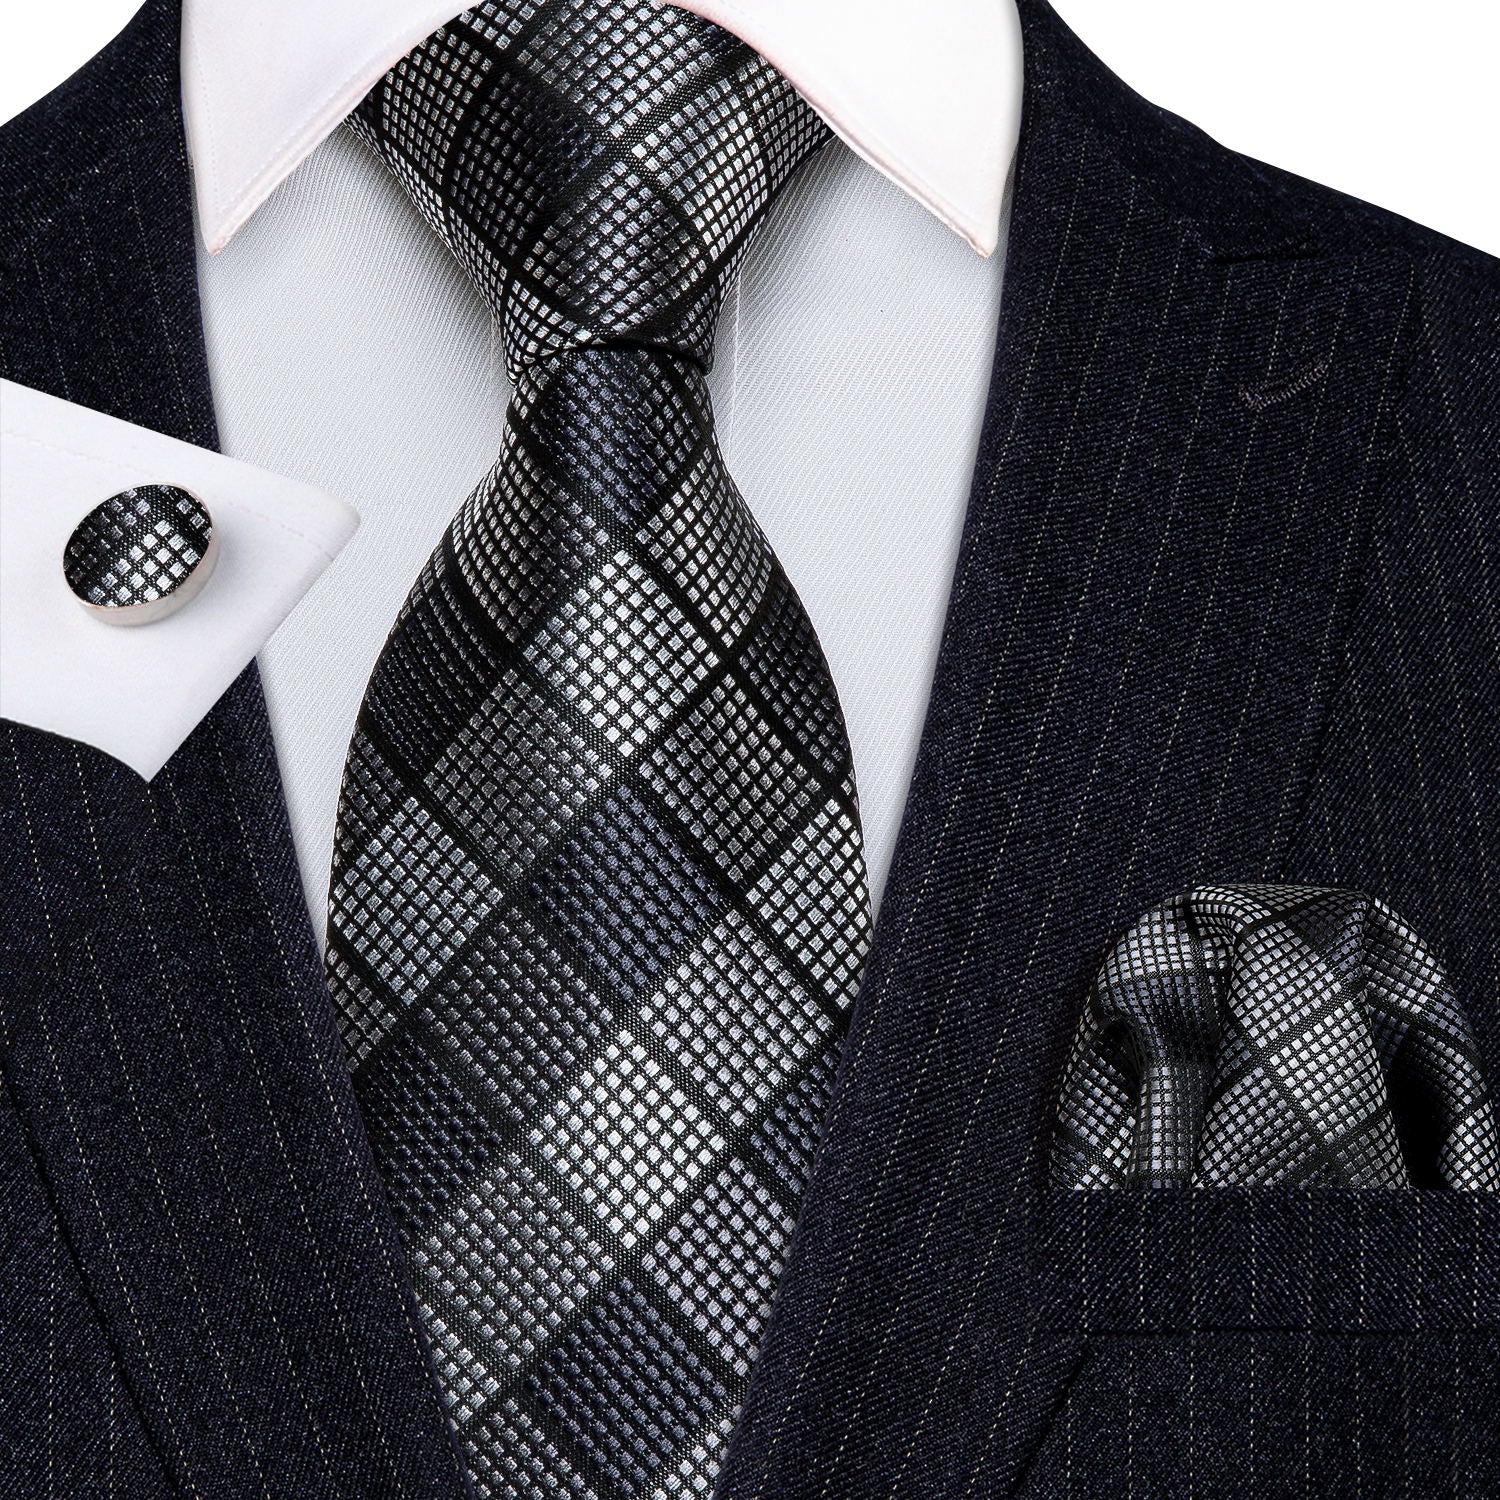 Barry.Wang Black Tie White Plaid Men's Tie Pocket Square Cufflinks Set